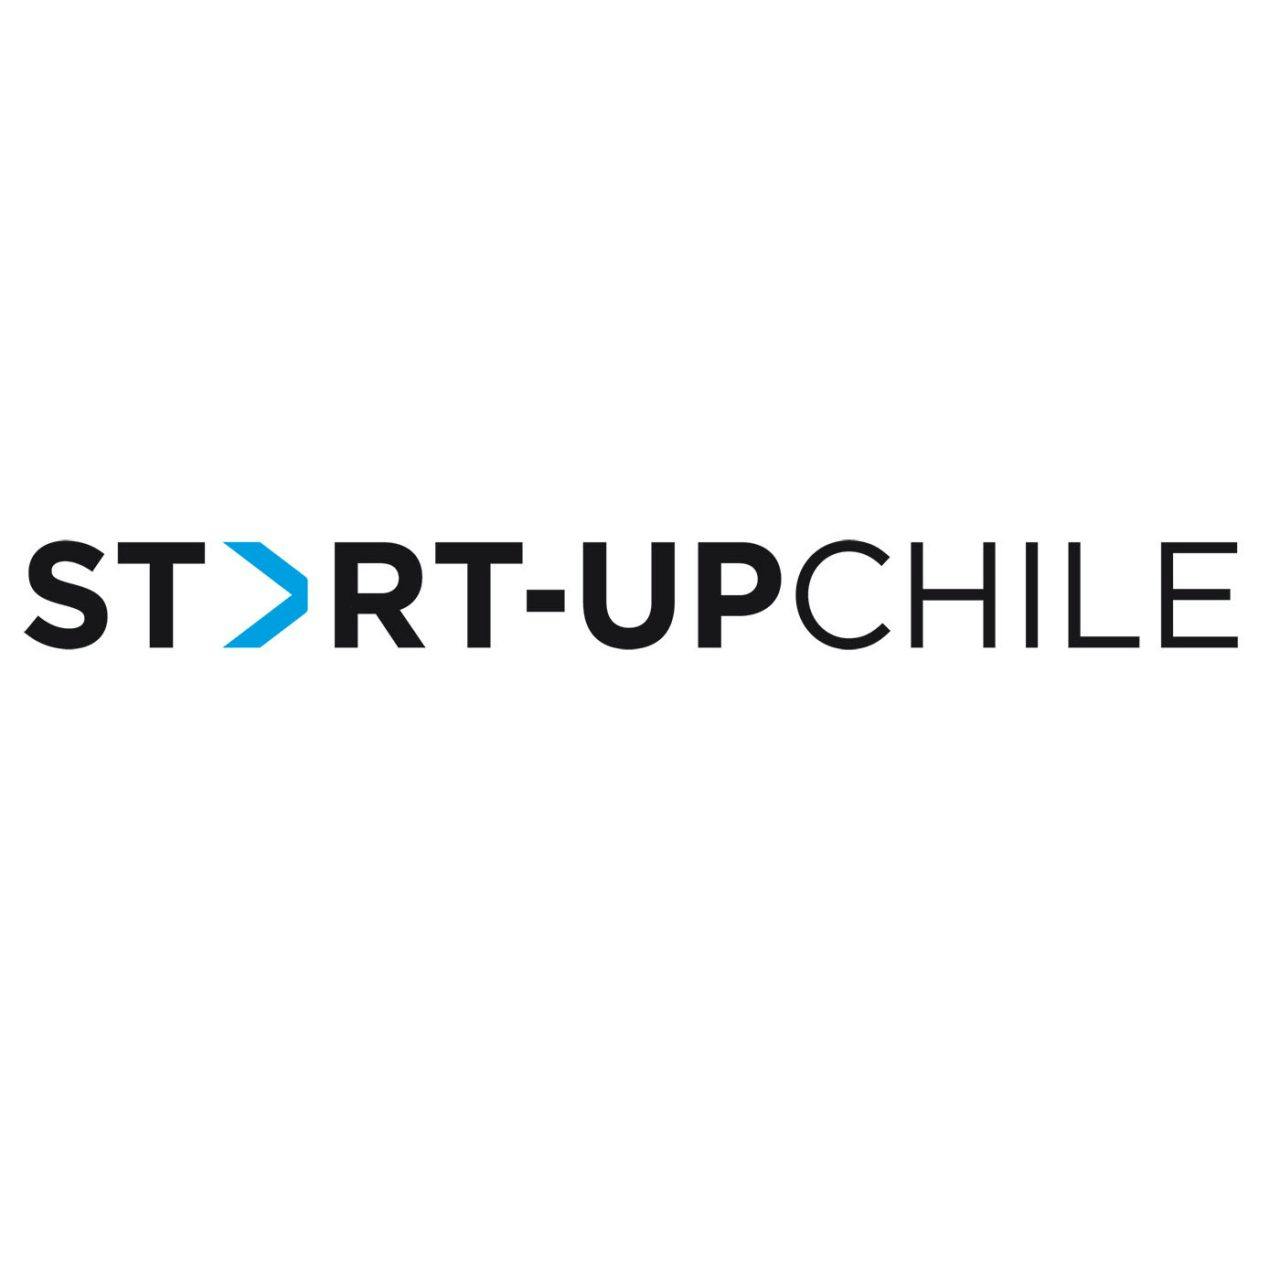 Startup Chile logo